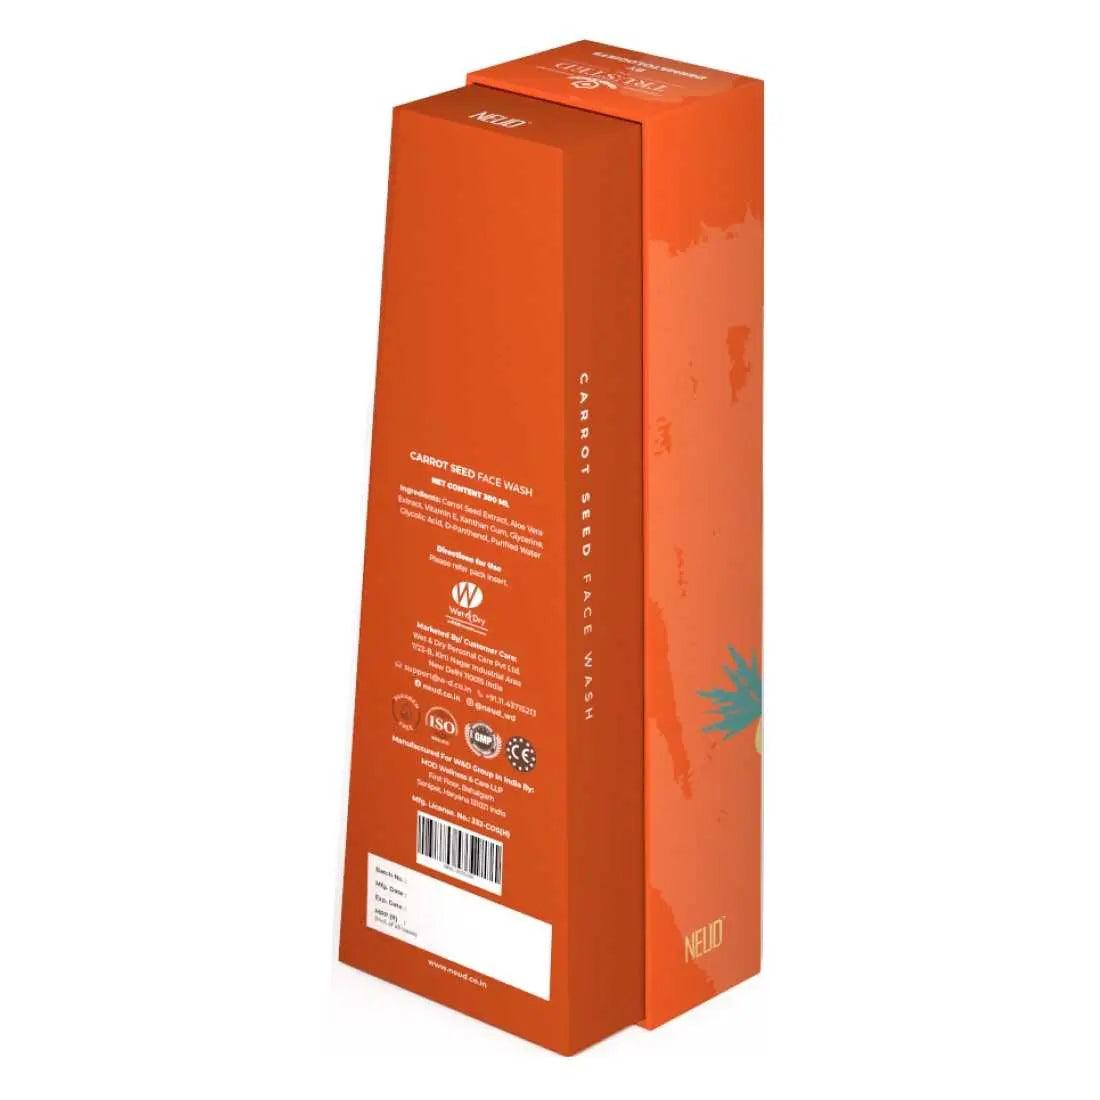 NEUD Carrot Seed Face Wash for Men & Women (300 ml)